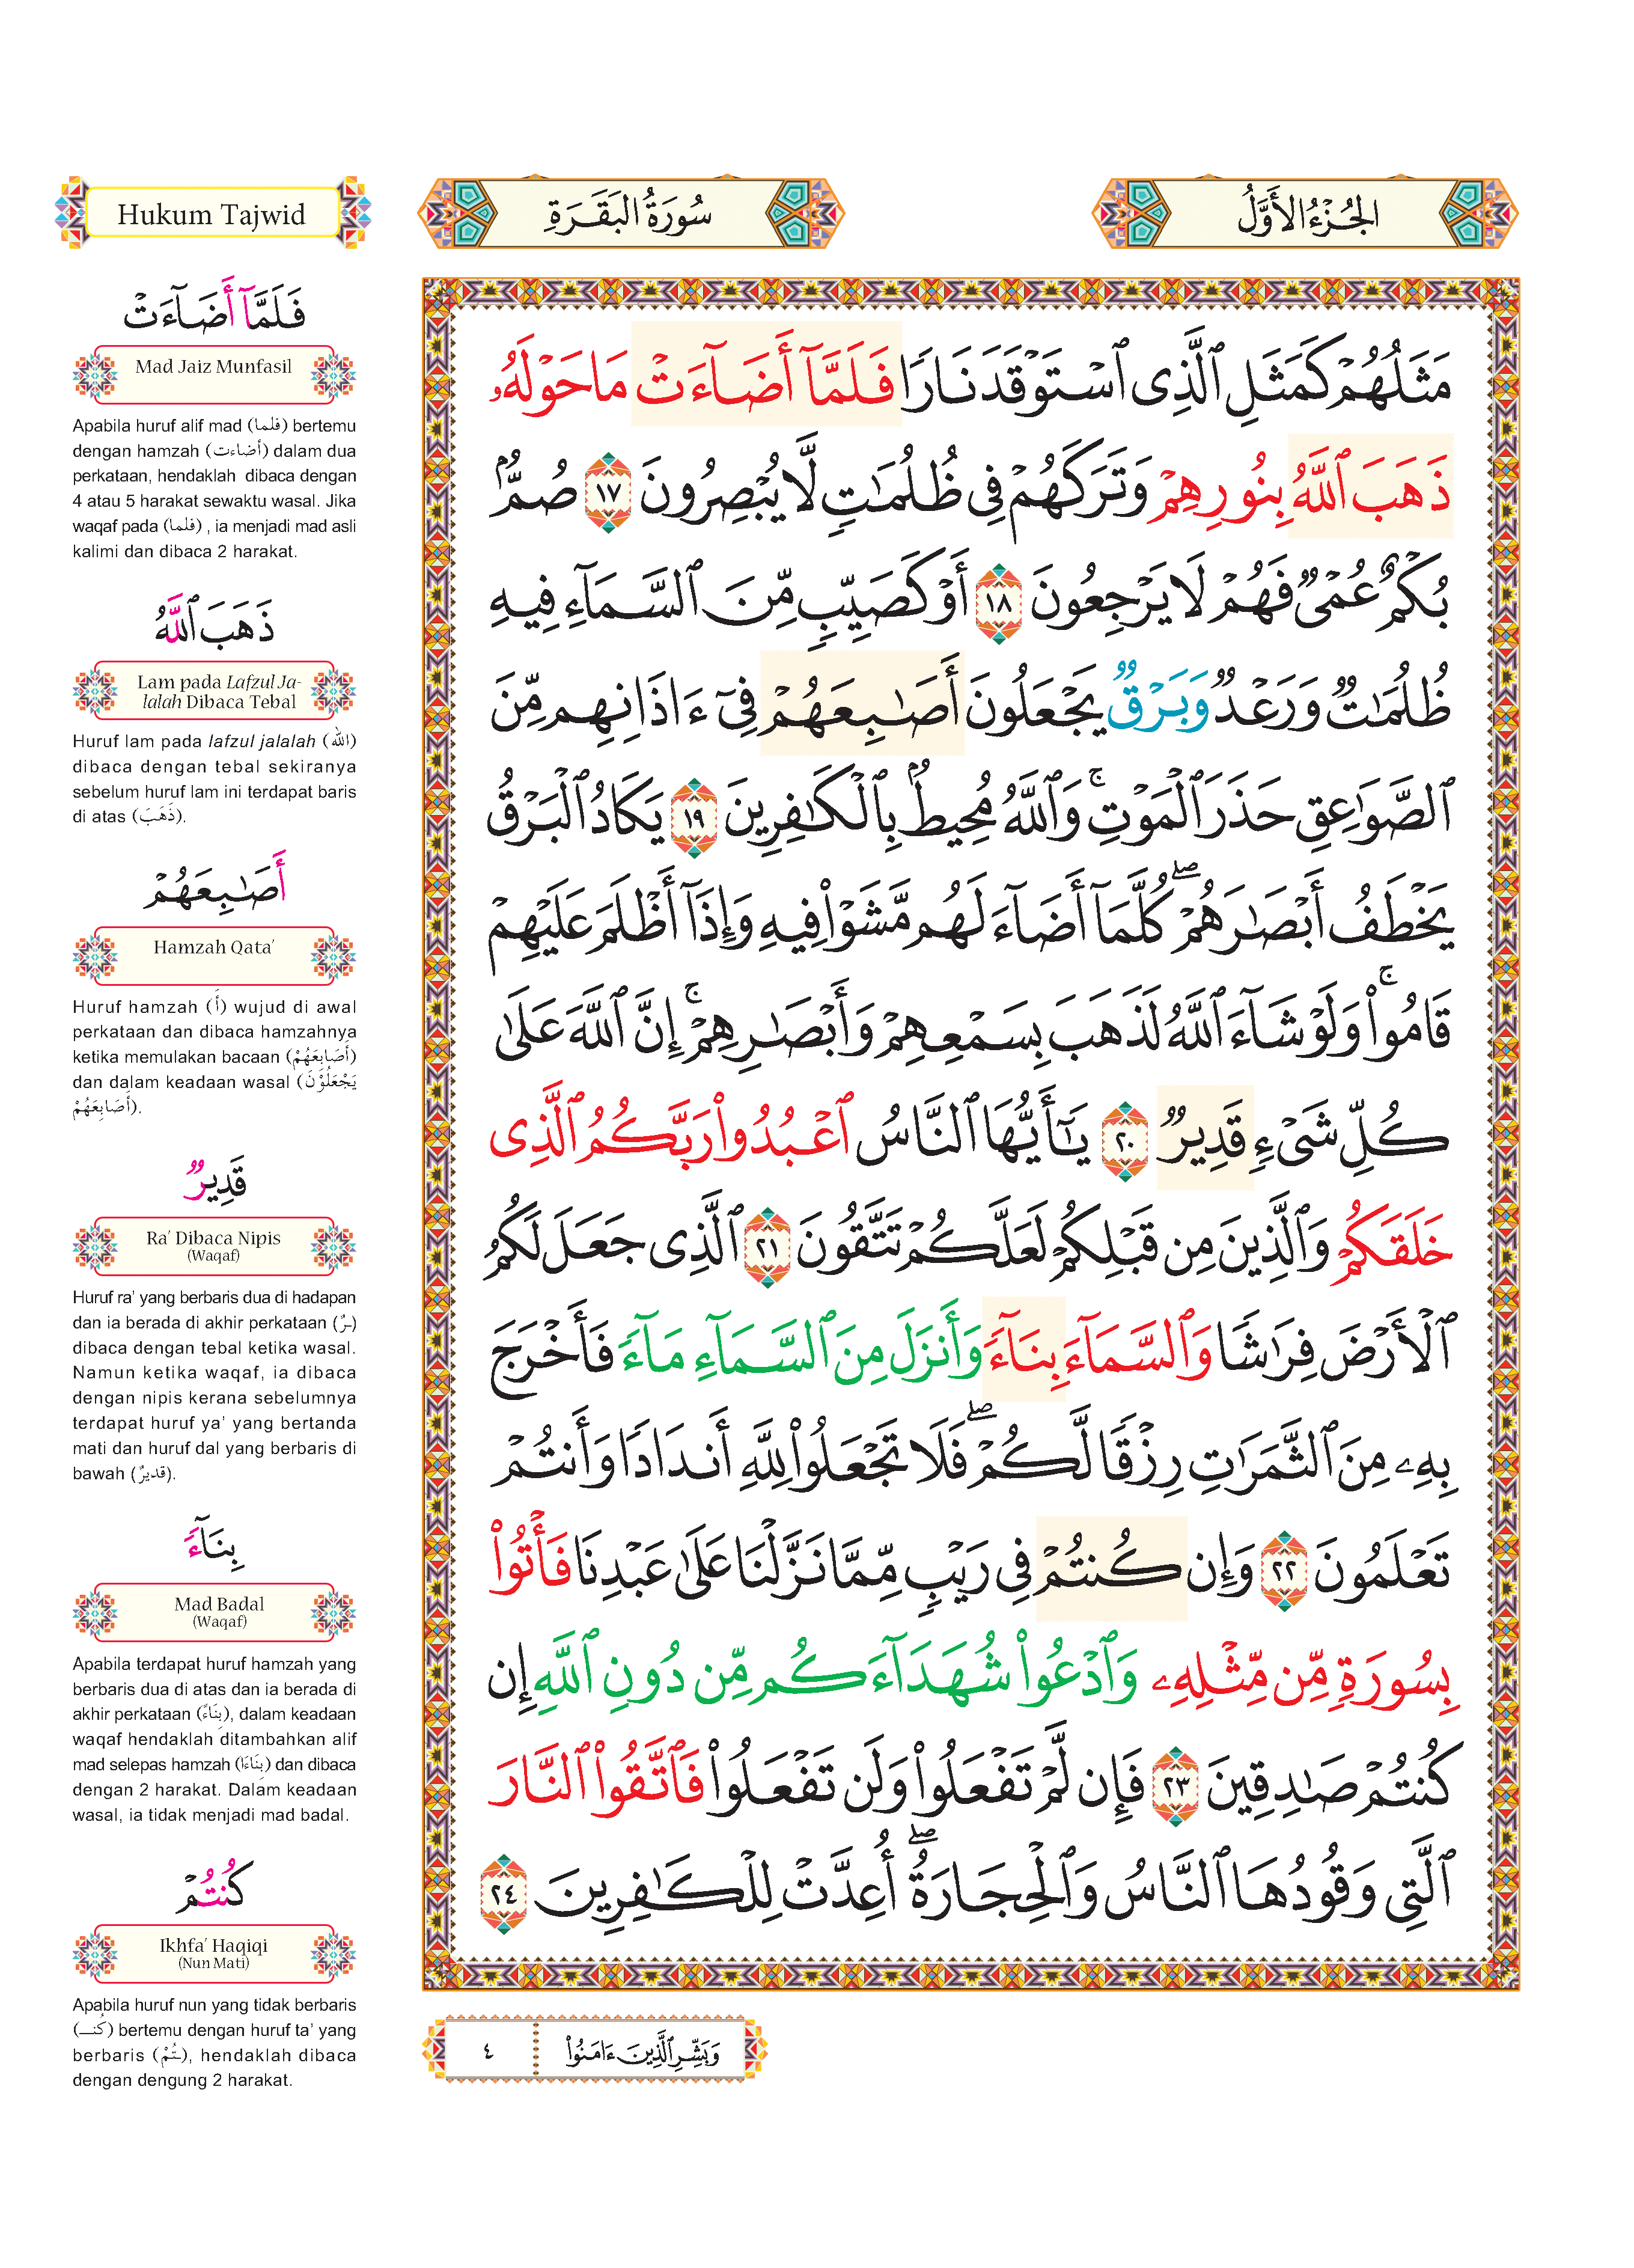 Al-Quran Al-Karim & Penerangan Hukum Tajwid Al-Mujawwad Dengan Panduan Waqaf & Ibtida’ (Per-3-Juzuk) - (TBAQ1024)